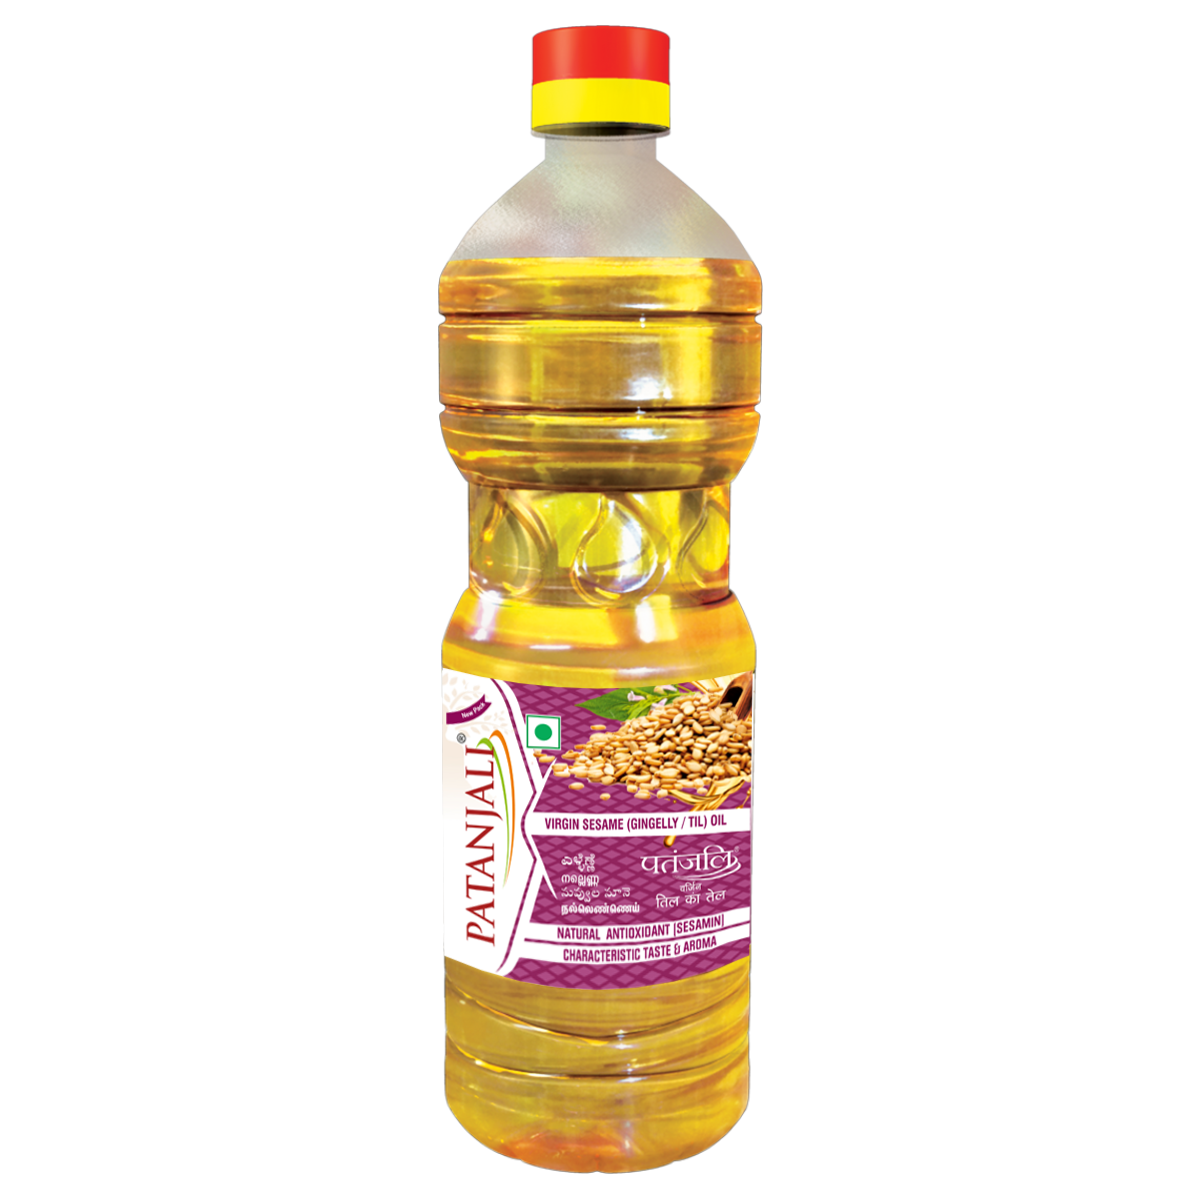 PATANJALI Mustard Oil, 1 L Bottle Mustard Oil PET Bottle Price in India -  Buy PATANJALI Mustard Oil, 1 L Bottle Mustard Oil PET Bottle online at  Flipkart.com